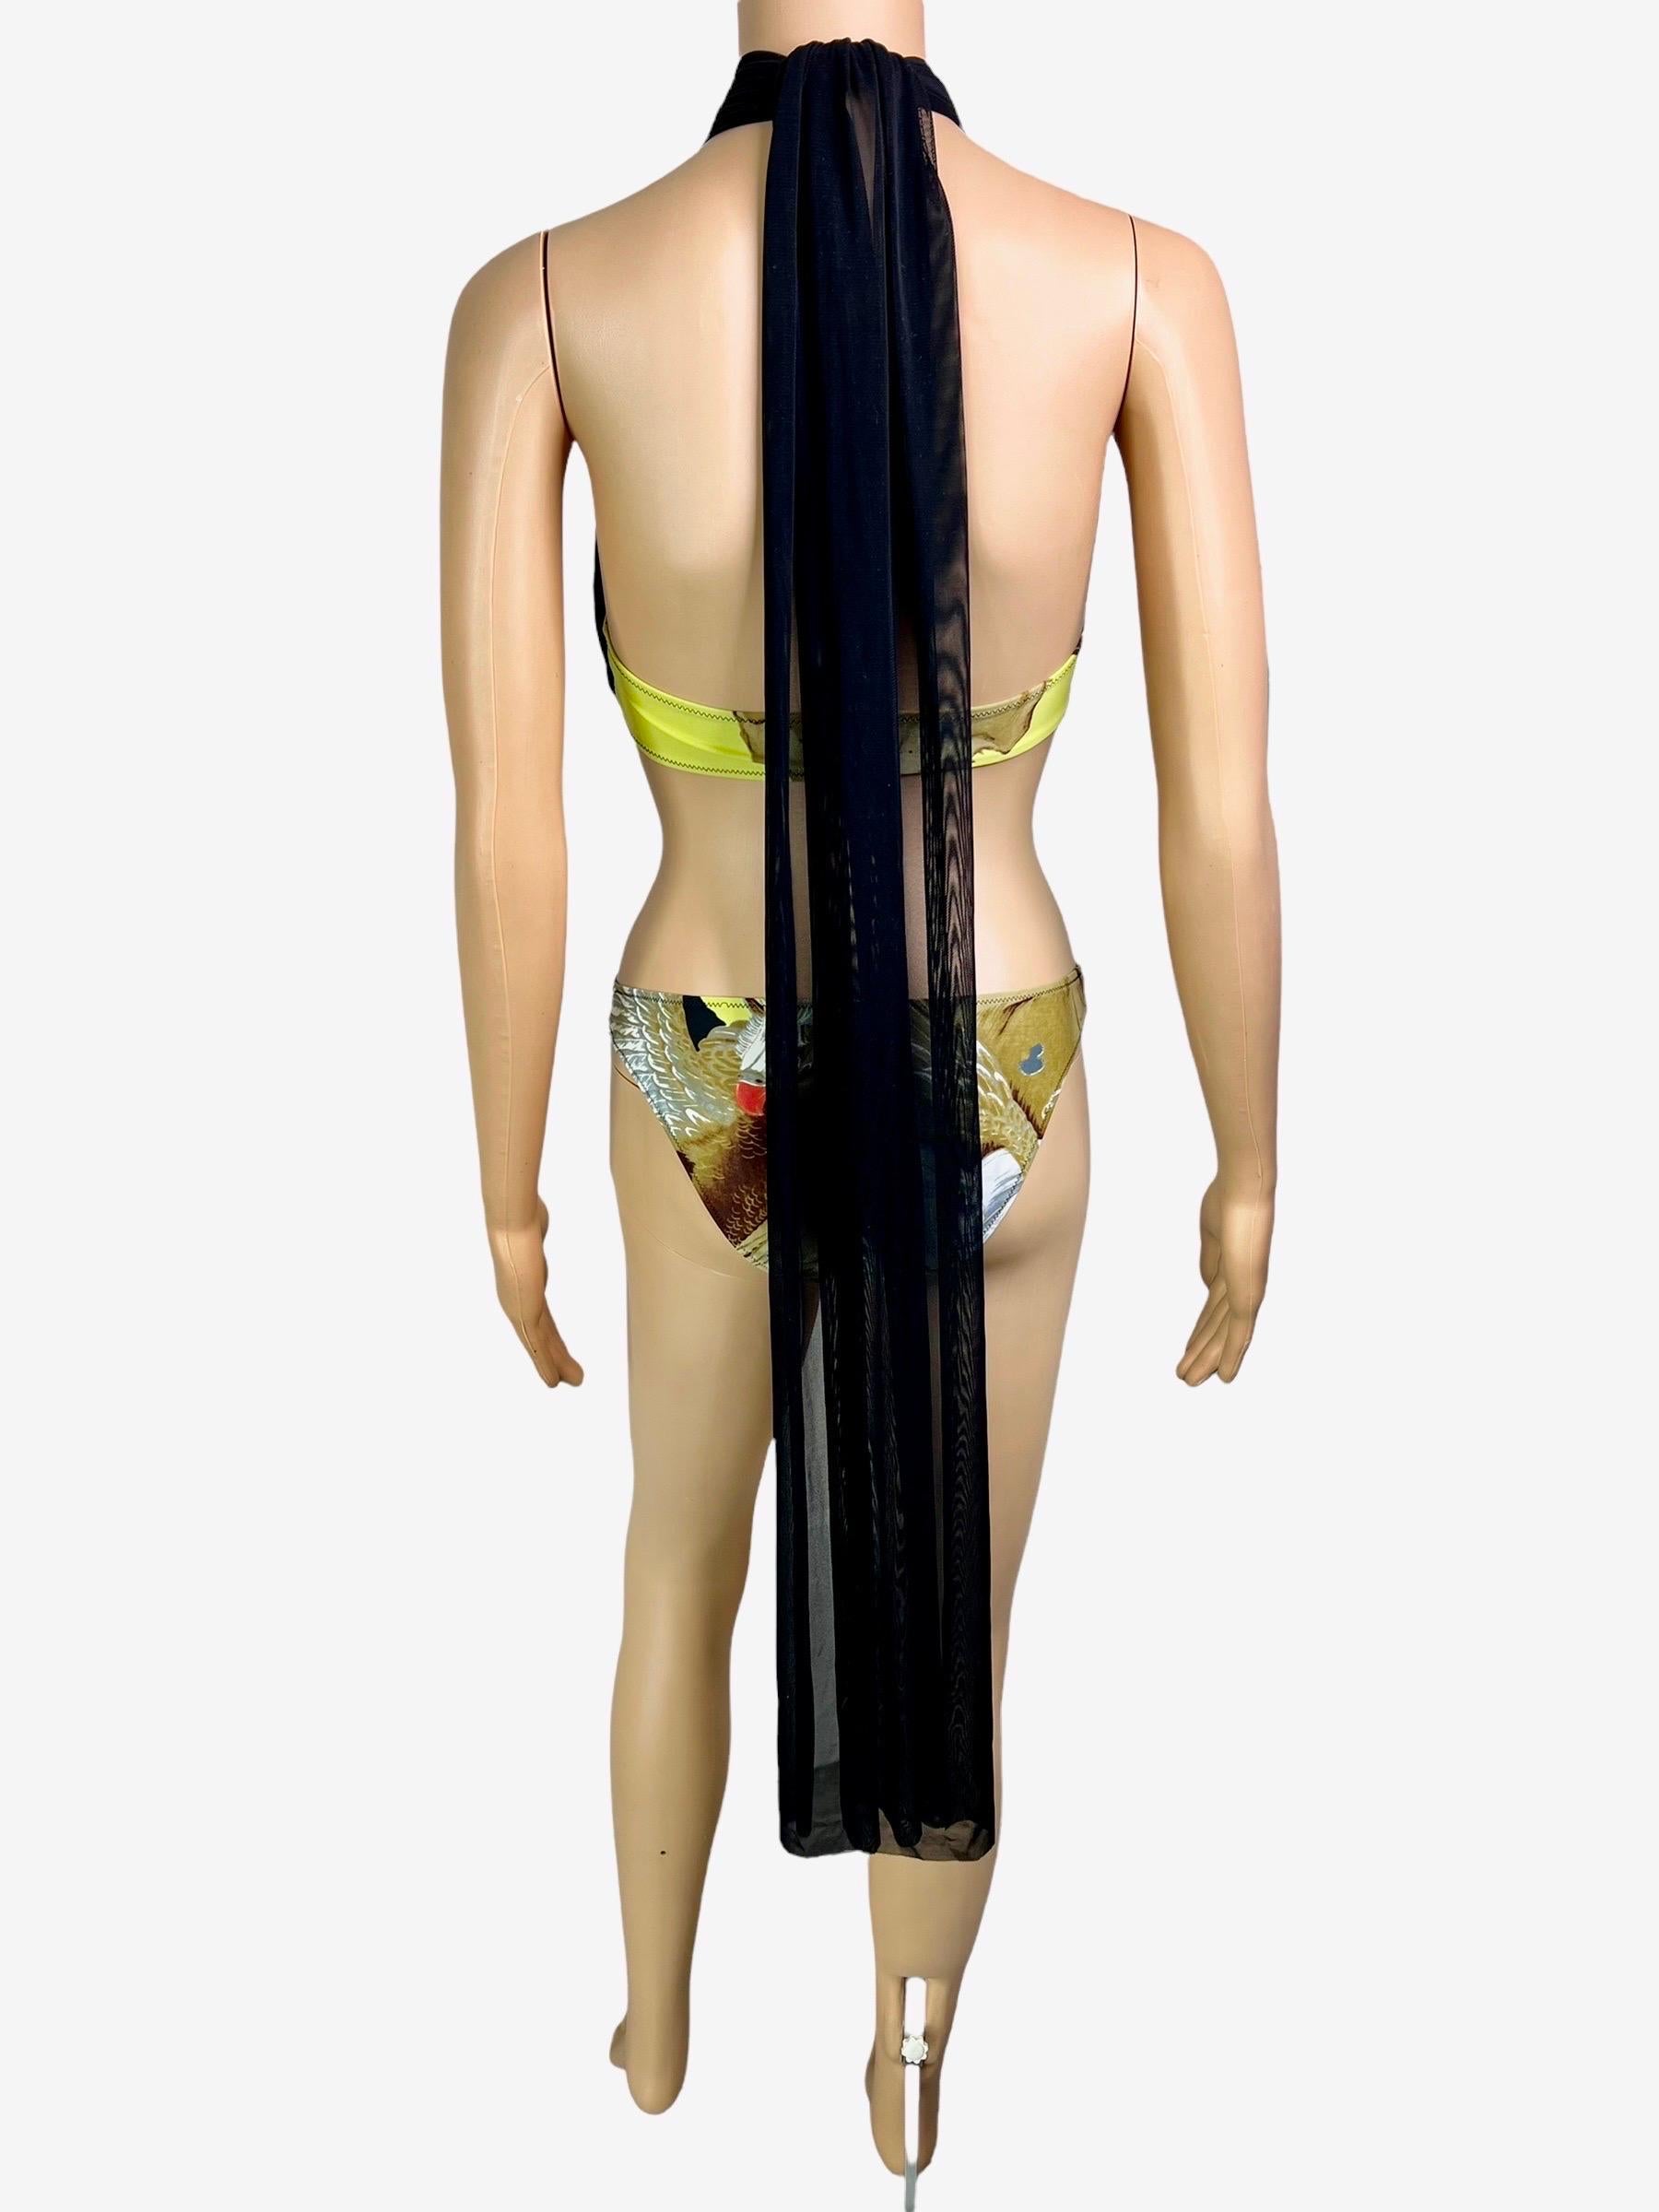 Jean Paul Gaultier Soleil Eagle Tattoo Bikini Swimwear Swimsuit 2 Piece Set For Sale 7